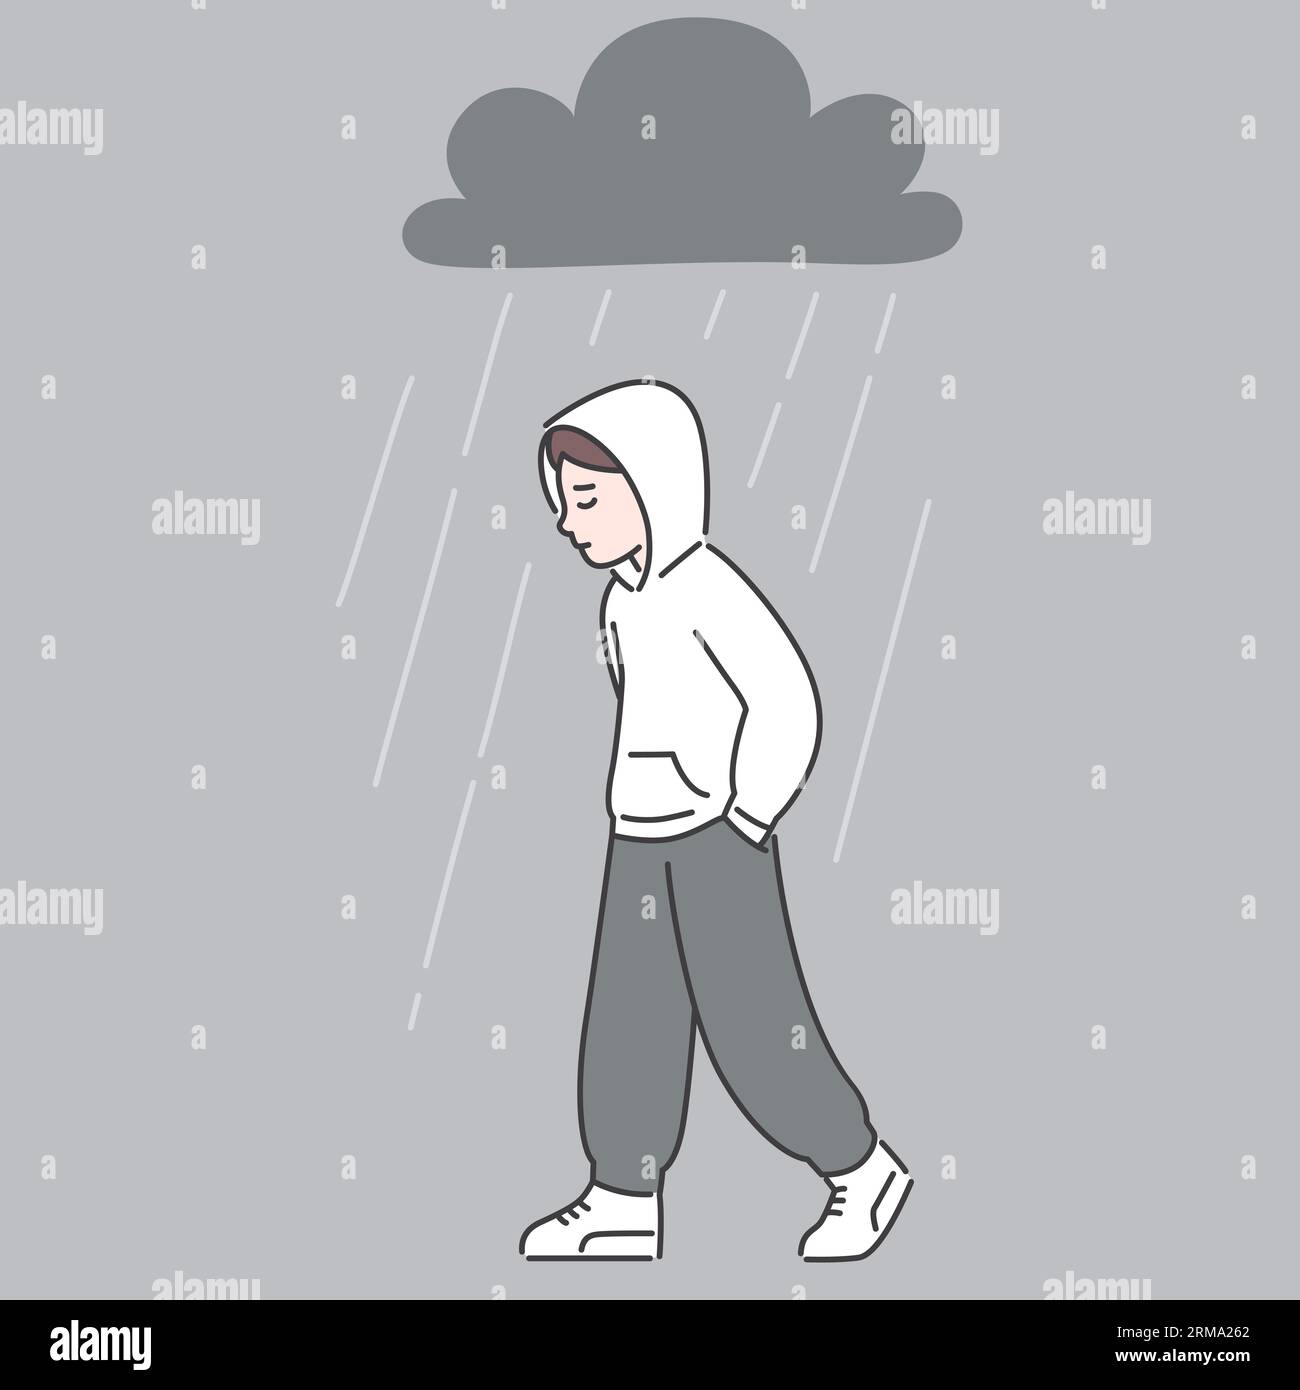 sad man walking in rain drawing